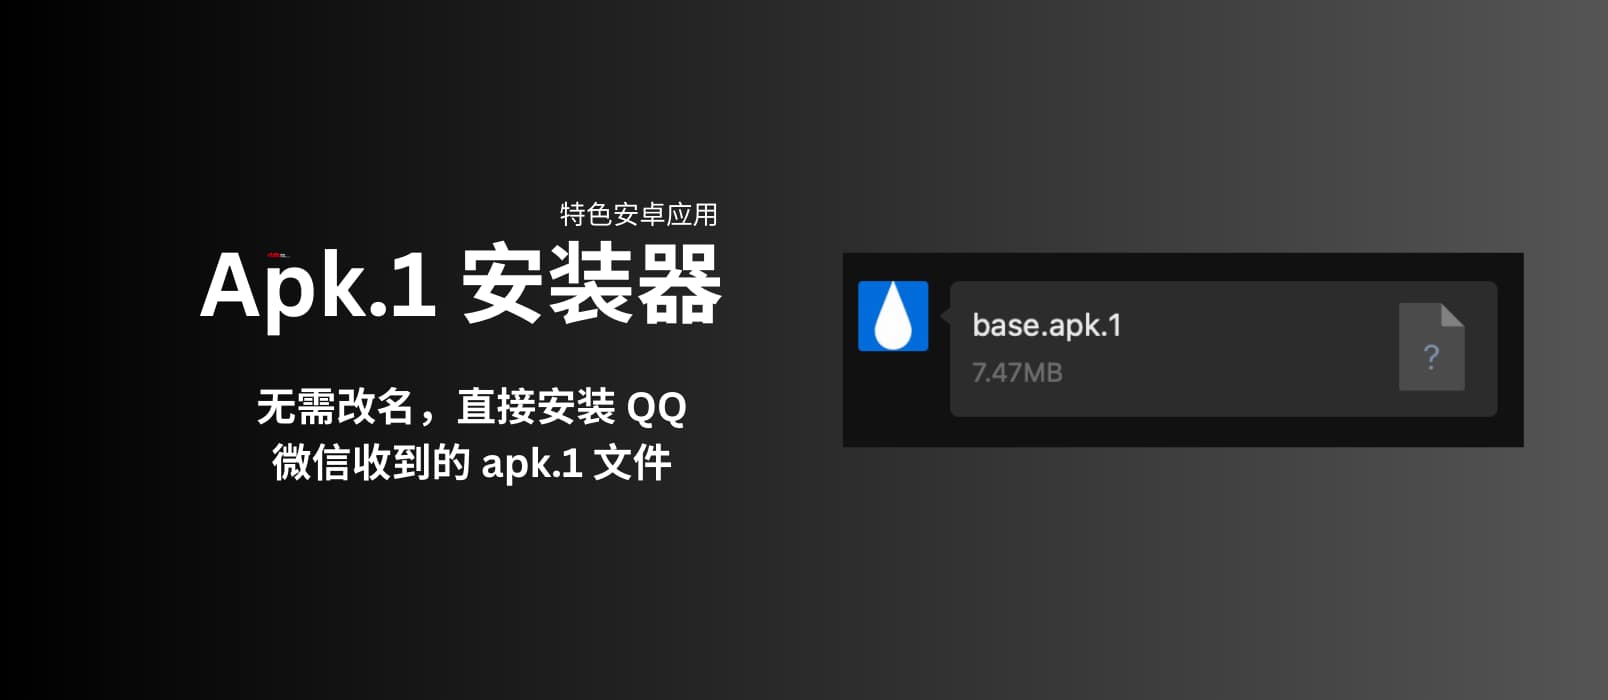 Apk.1 安装器 - 特色安卓应用：无需改名，直接安装 QQ、微信收到的 apk.1 文件